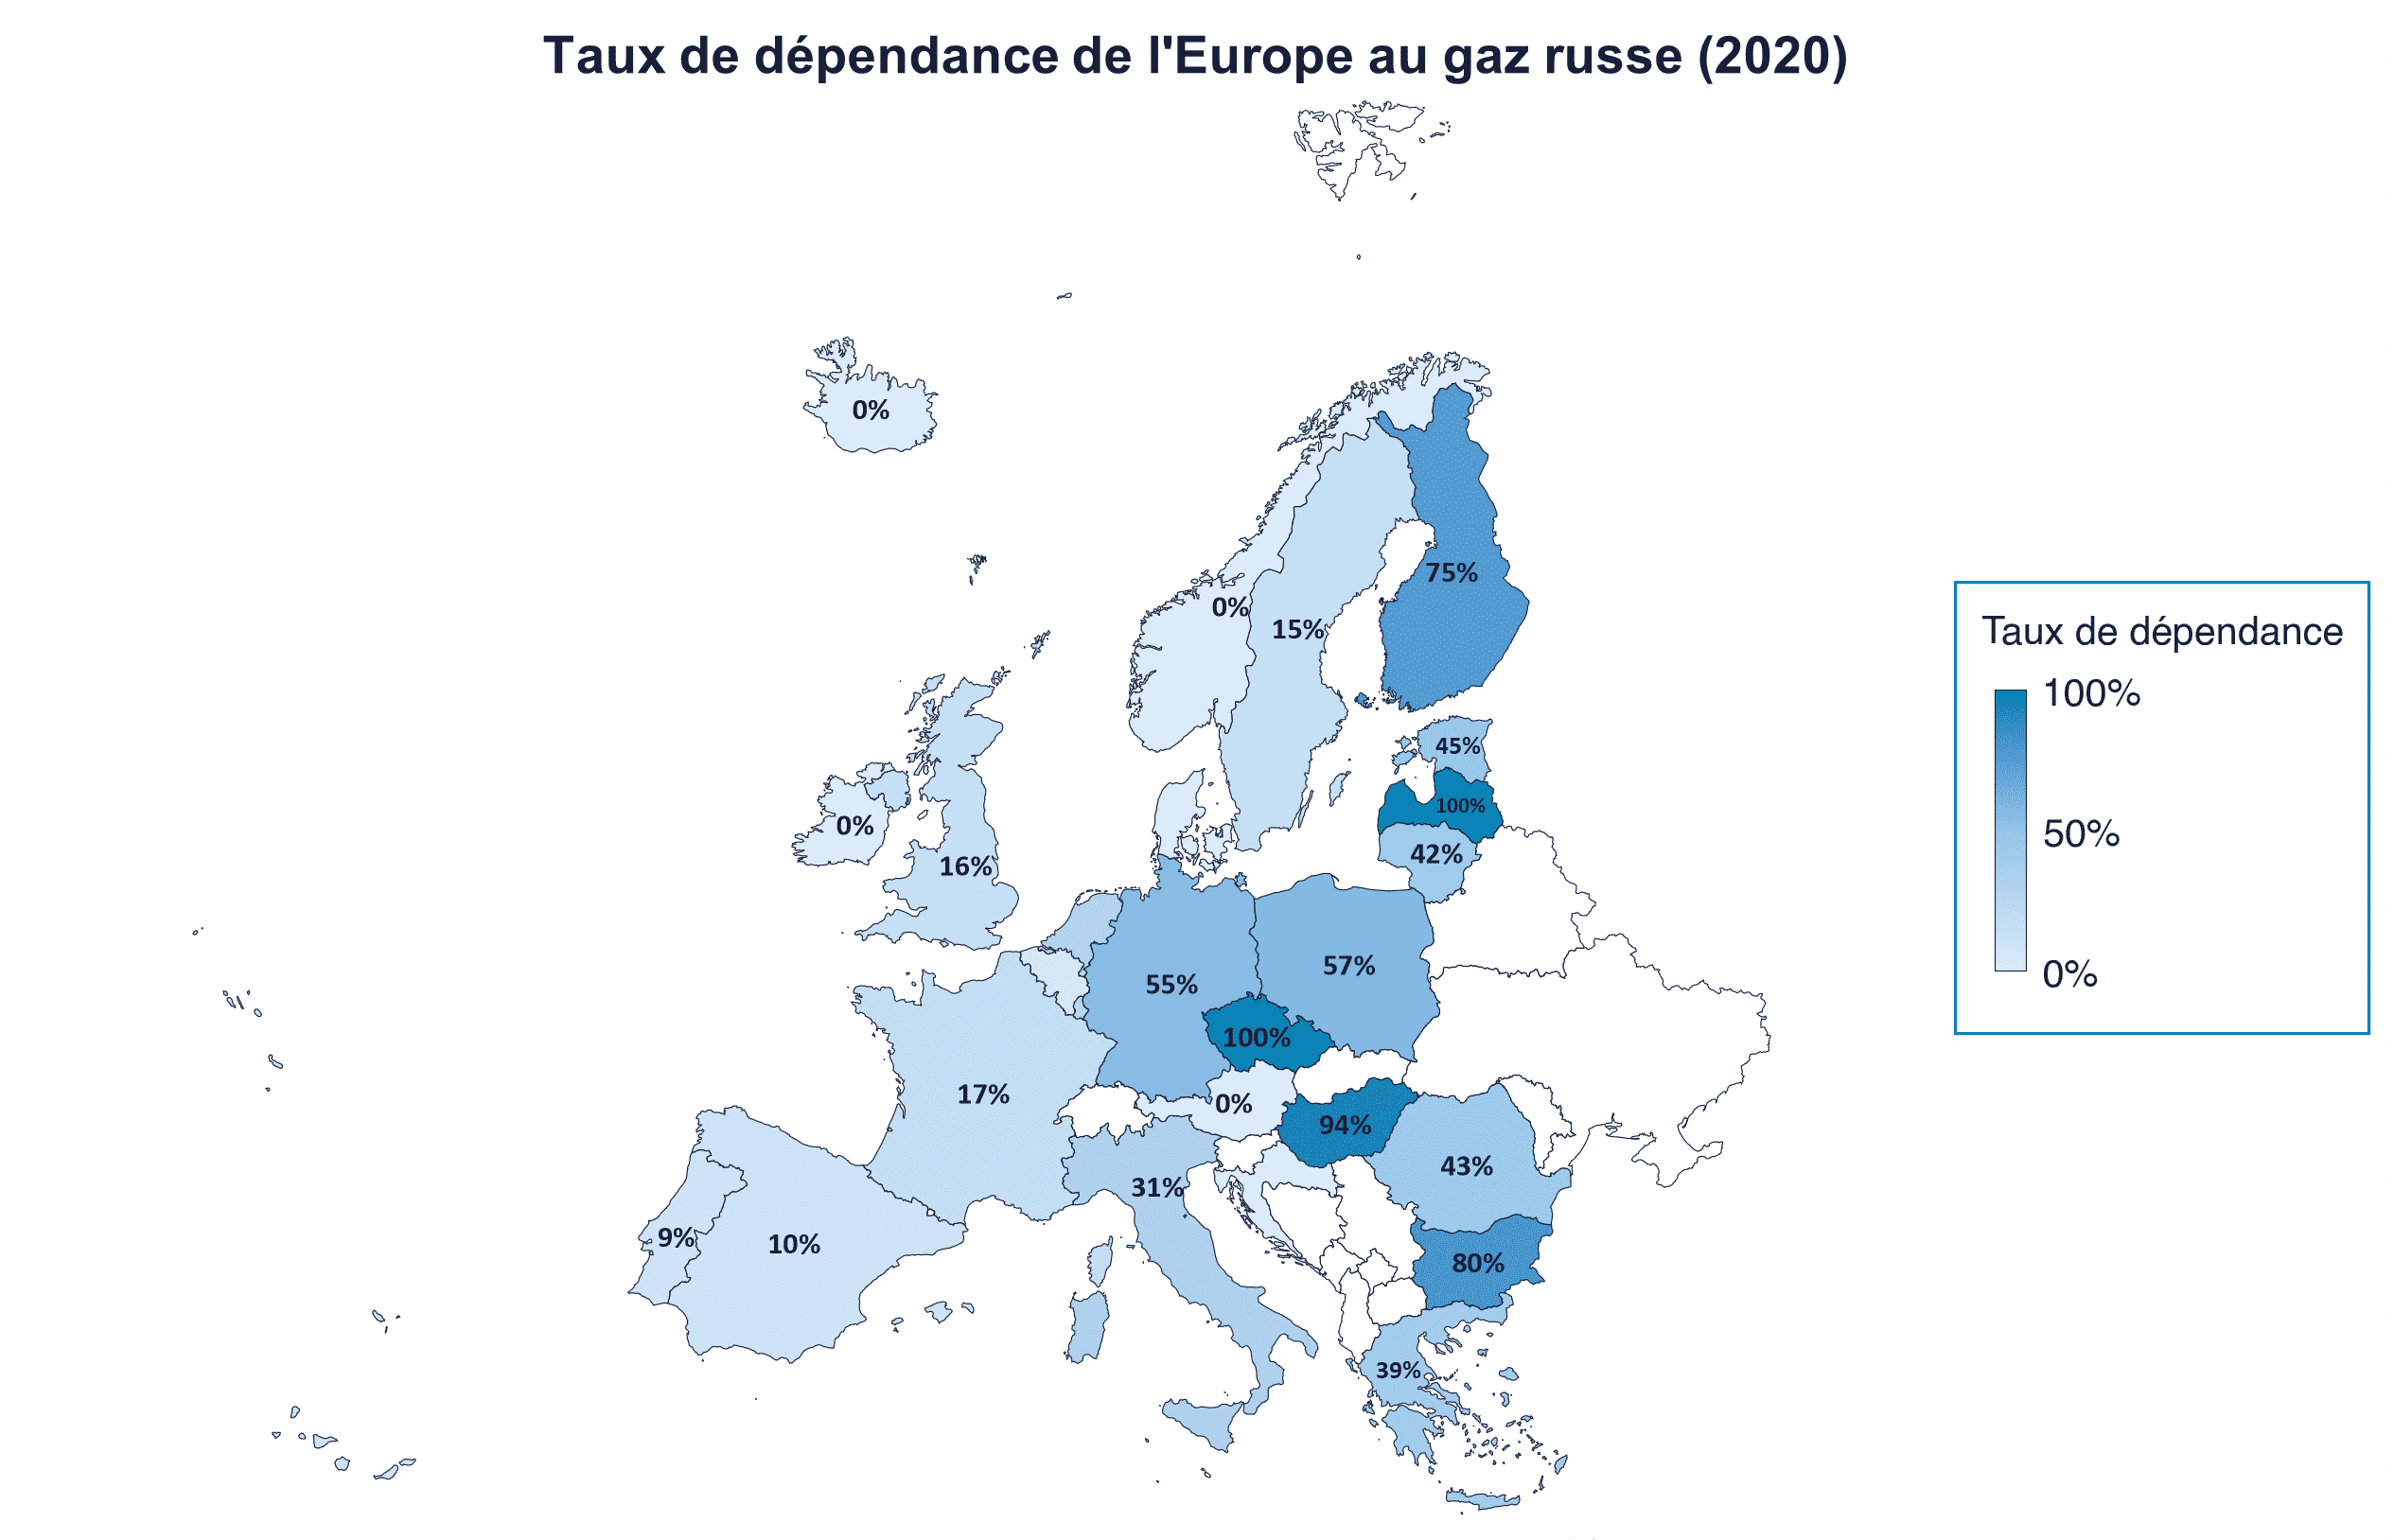 Europe gaz russe